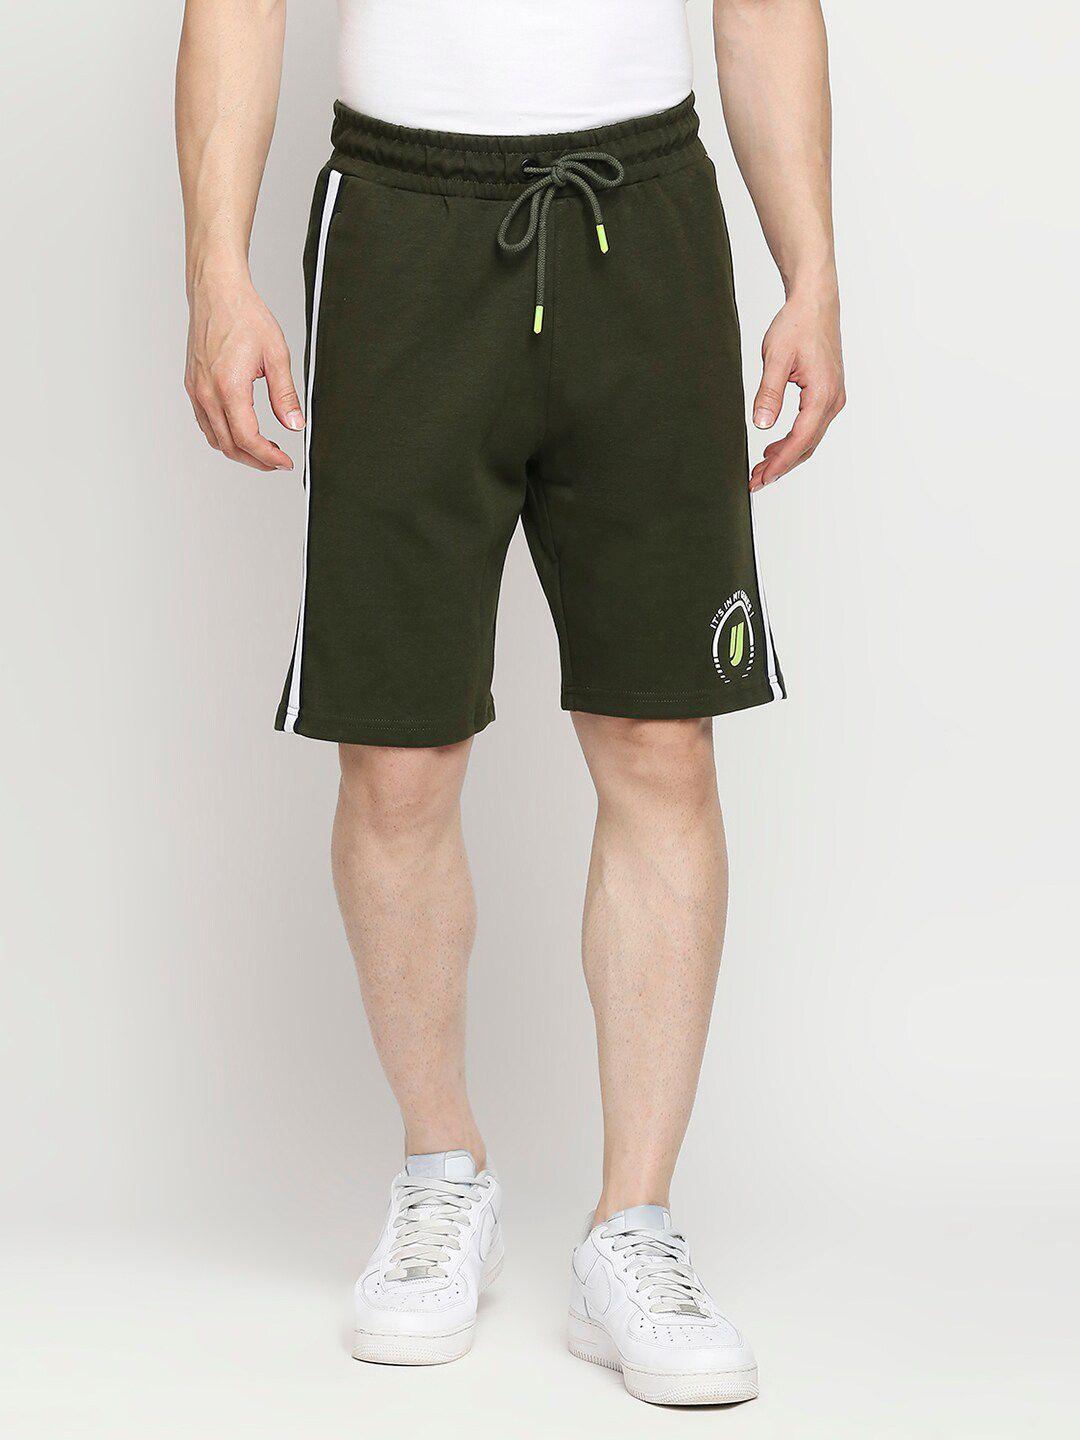 underjeans-by-spykar-men-green-solid-shorts